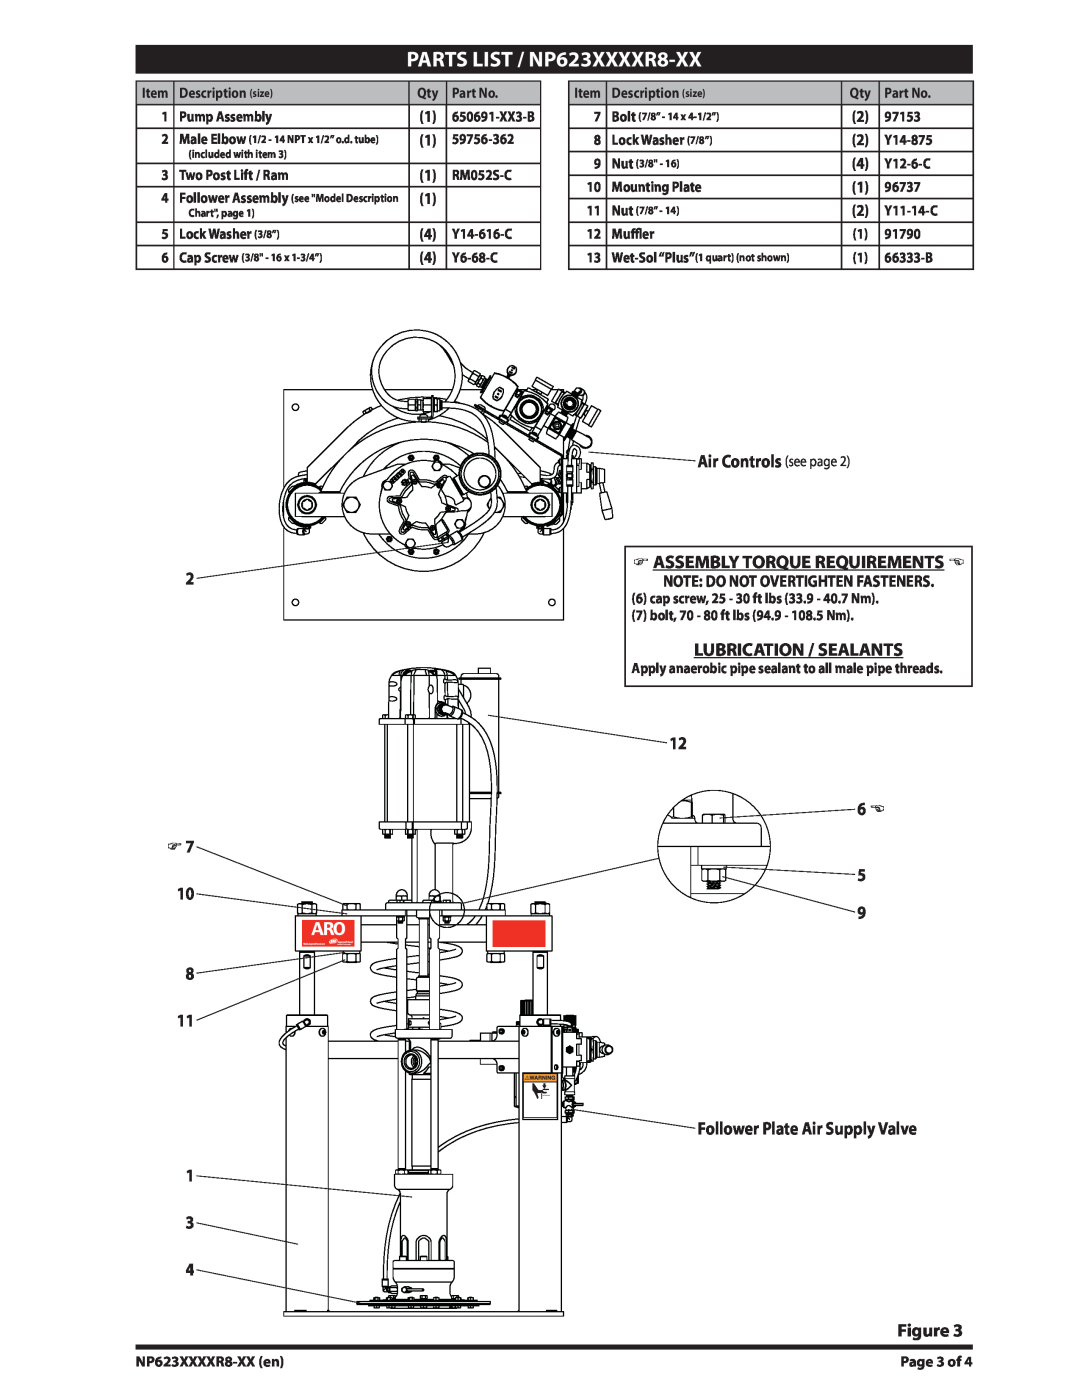 Ingersoll-Rand manual PARTS LIST / NP623XXXXR8-XX, Air Controls see page, Lubrication / Sealants 